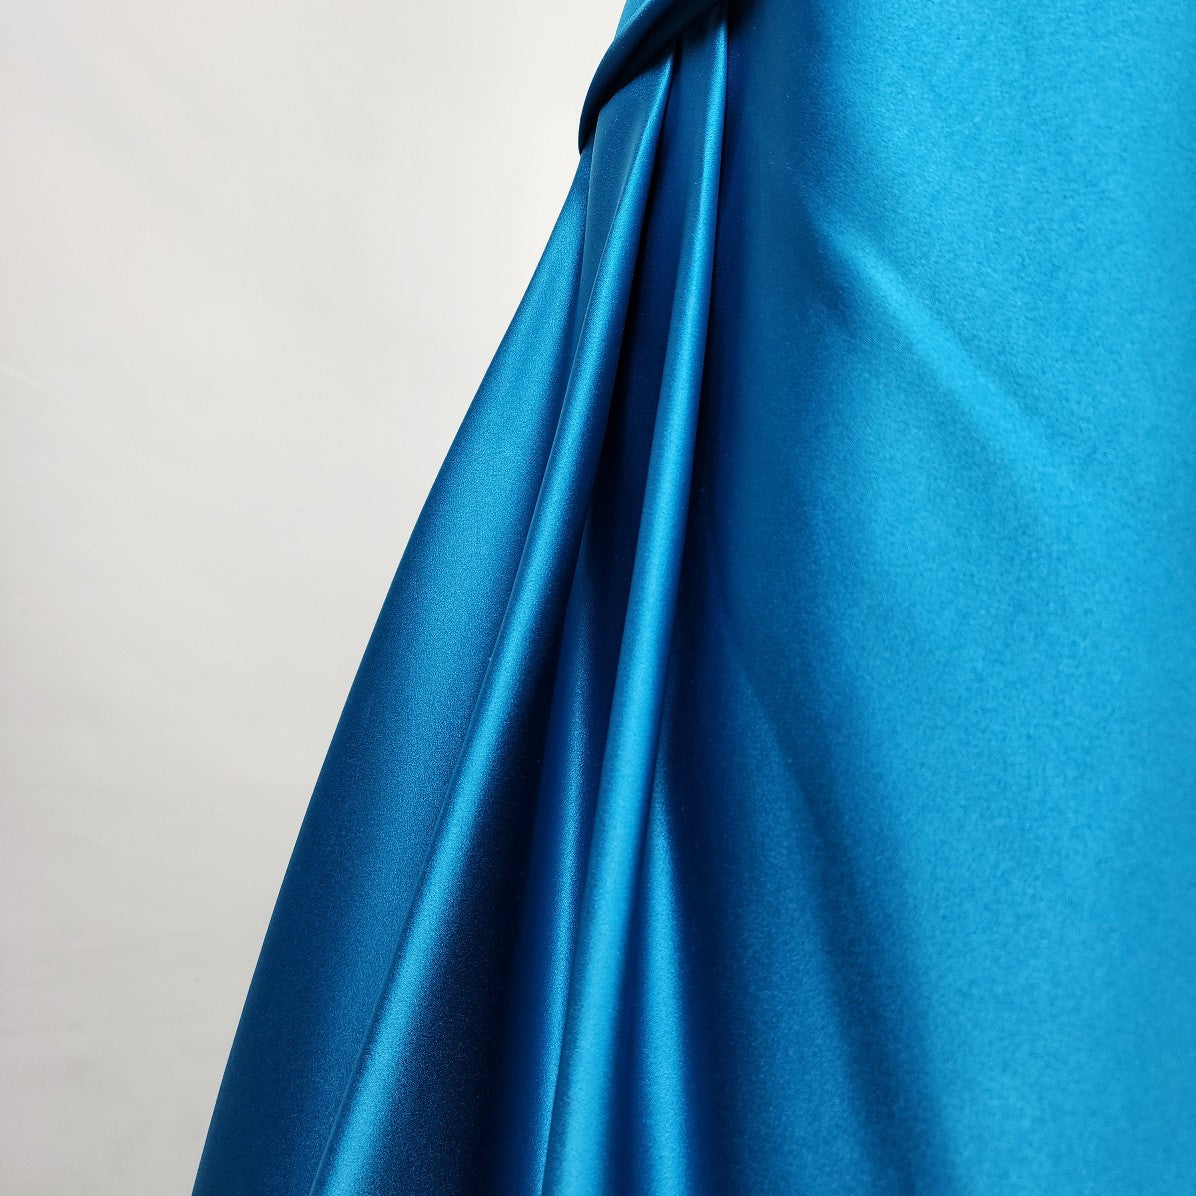 Symphony of Venus Blue Satin Crystal Detail Gown Size 1X-2X Grad Eventwear